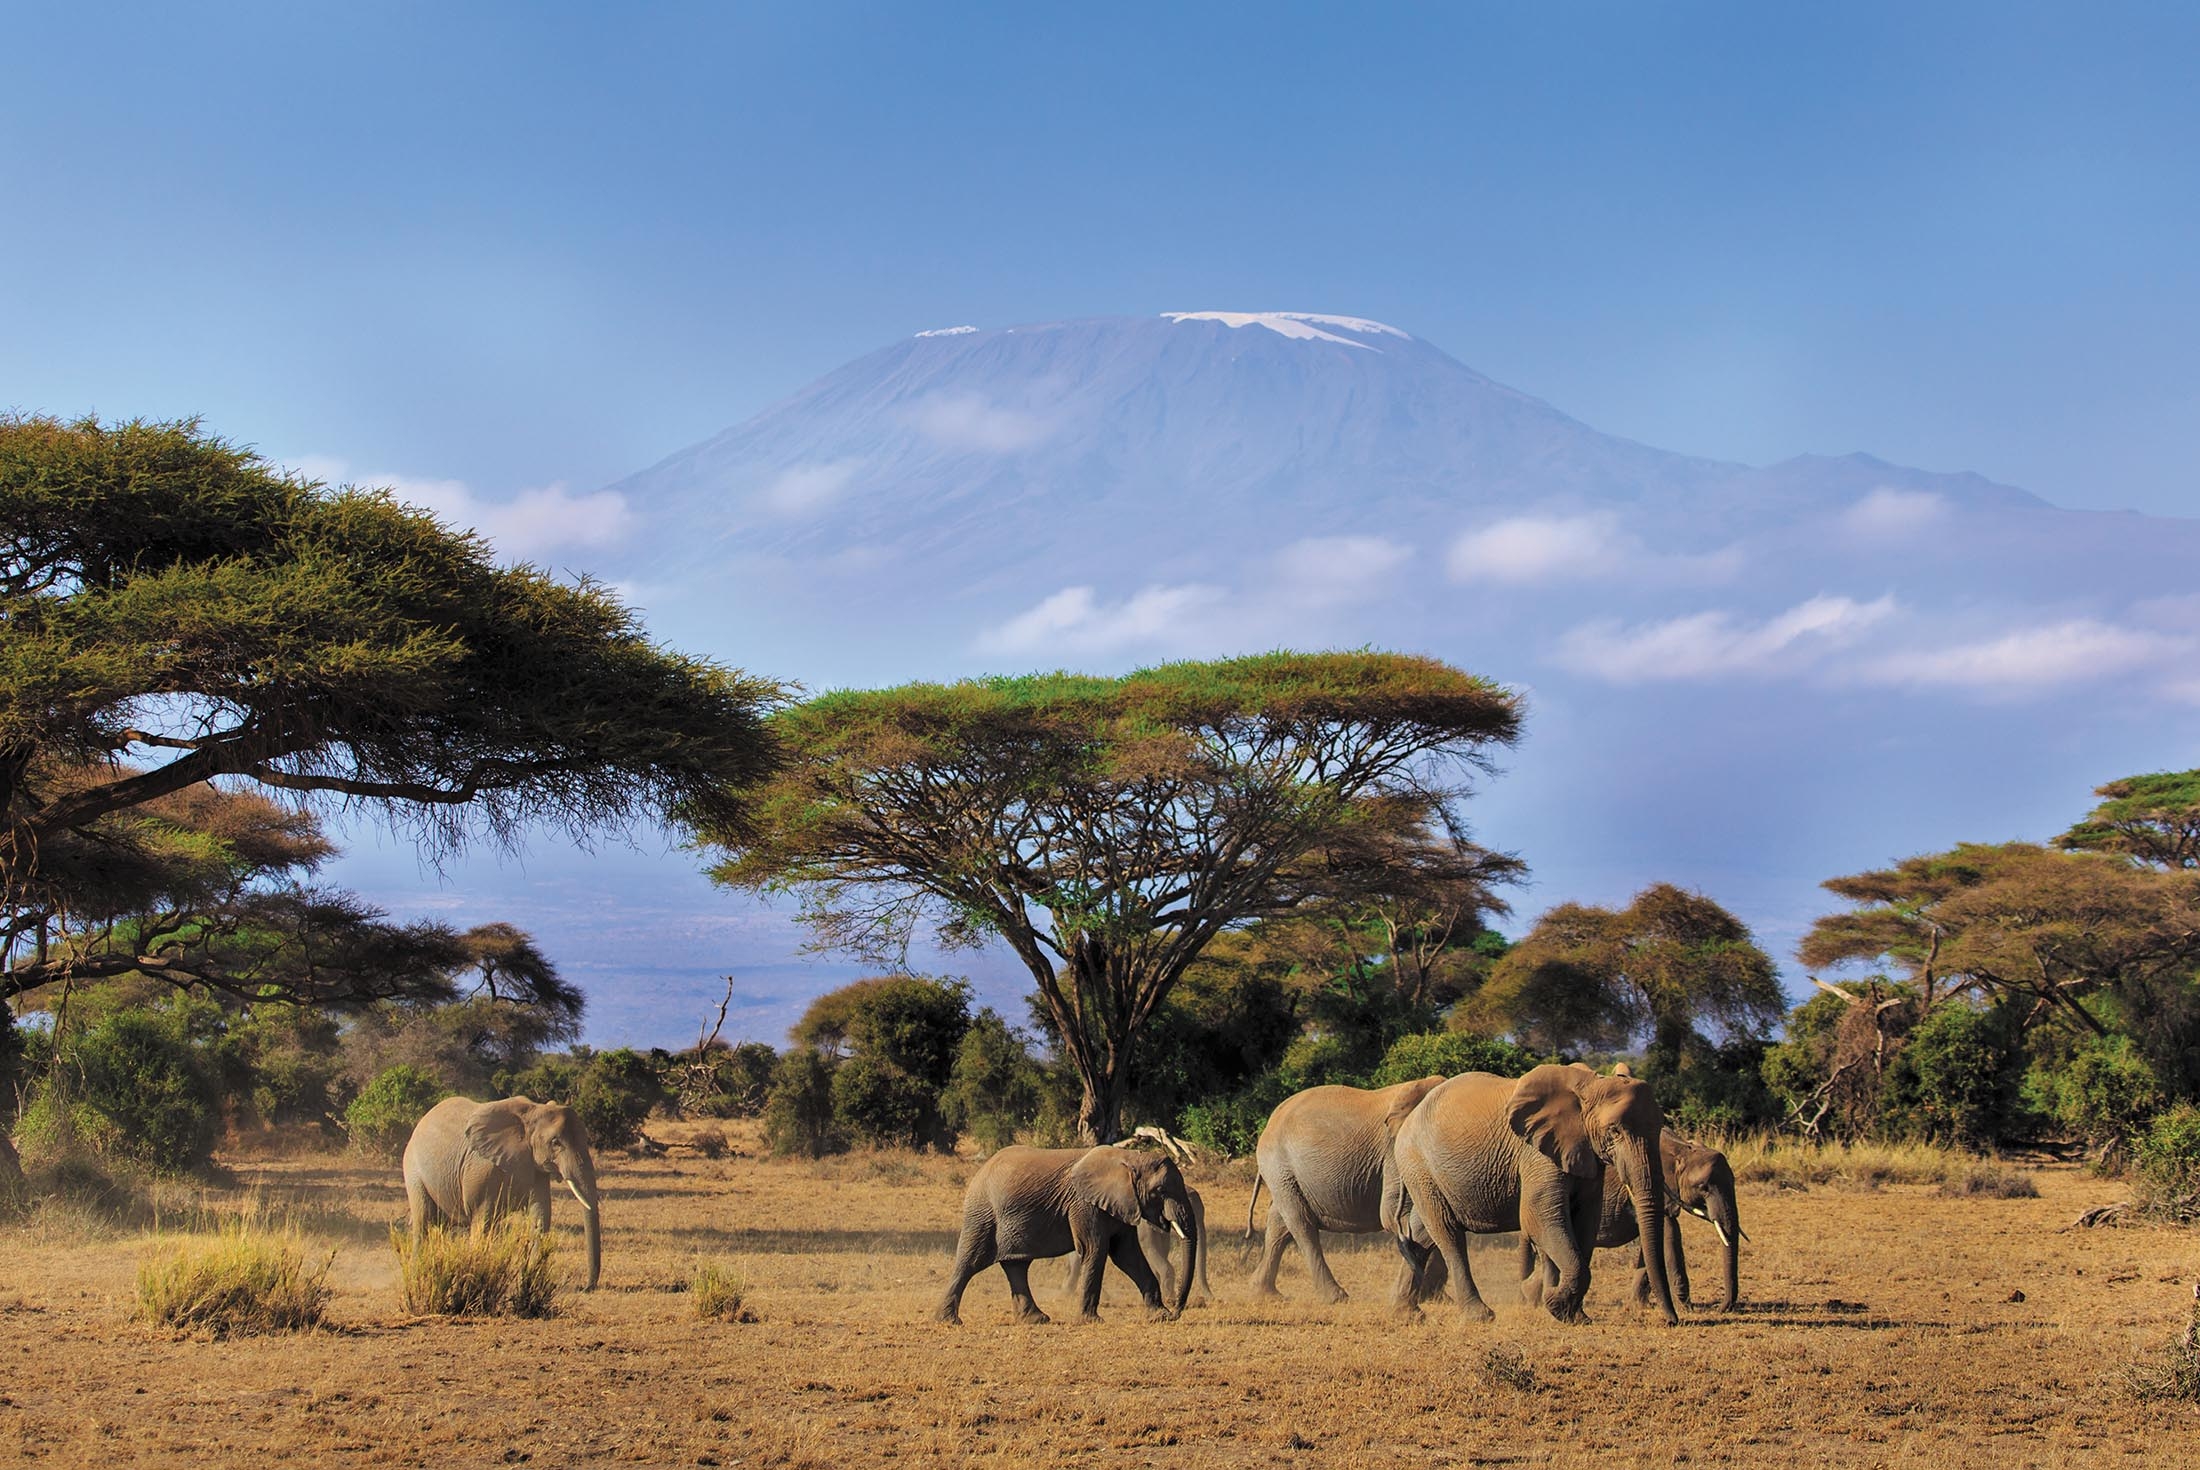 Elephants in the Savanna, Kilimanjaro in the background, Kenya 